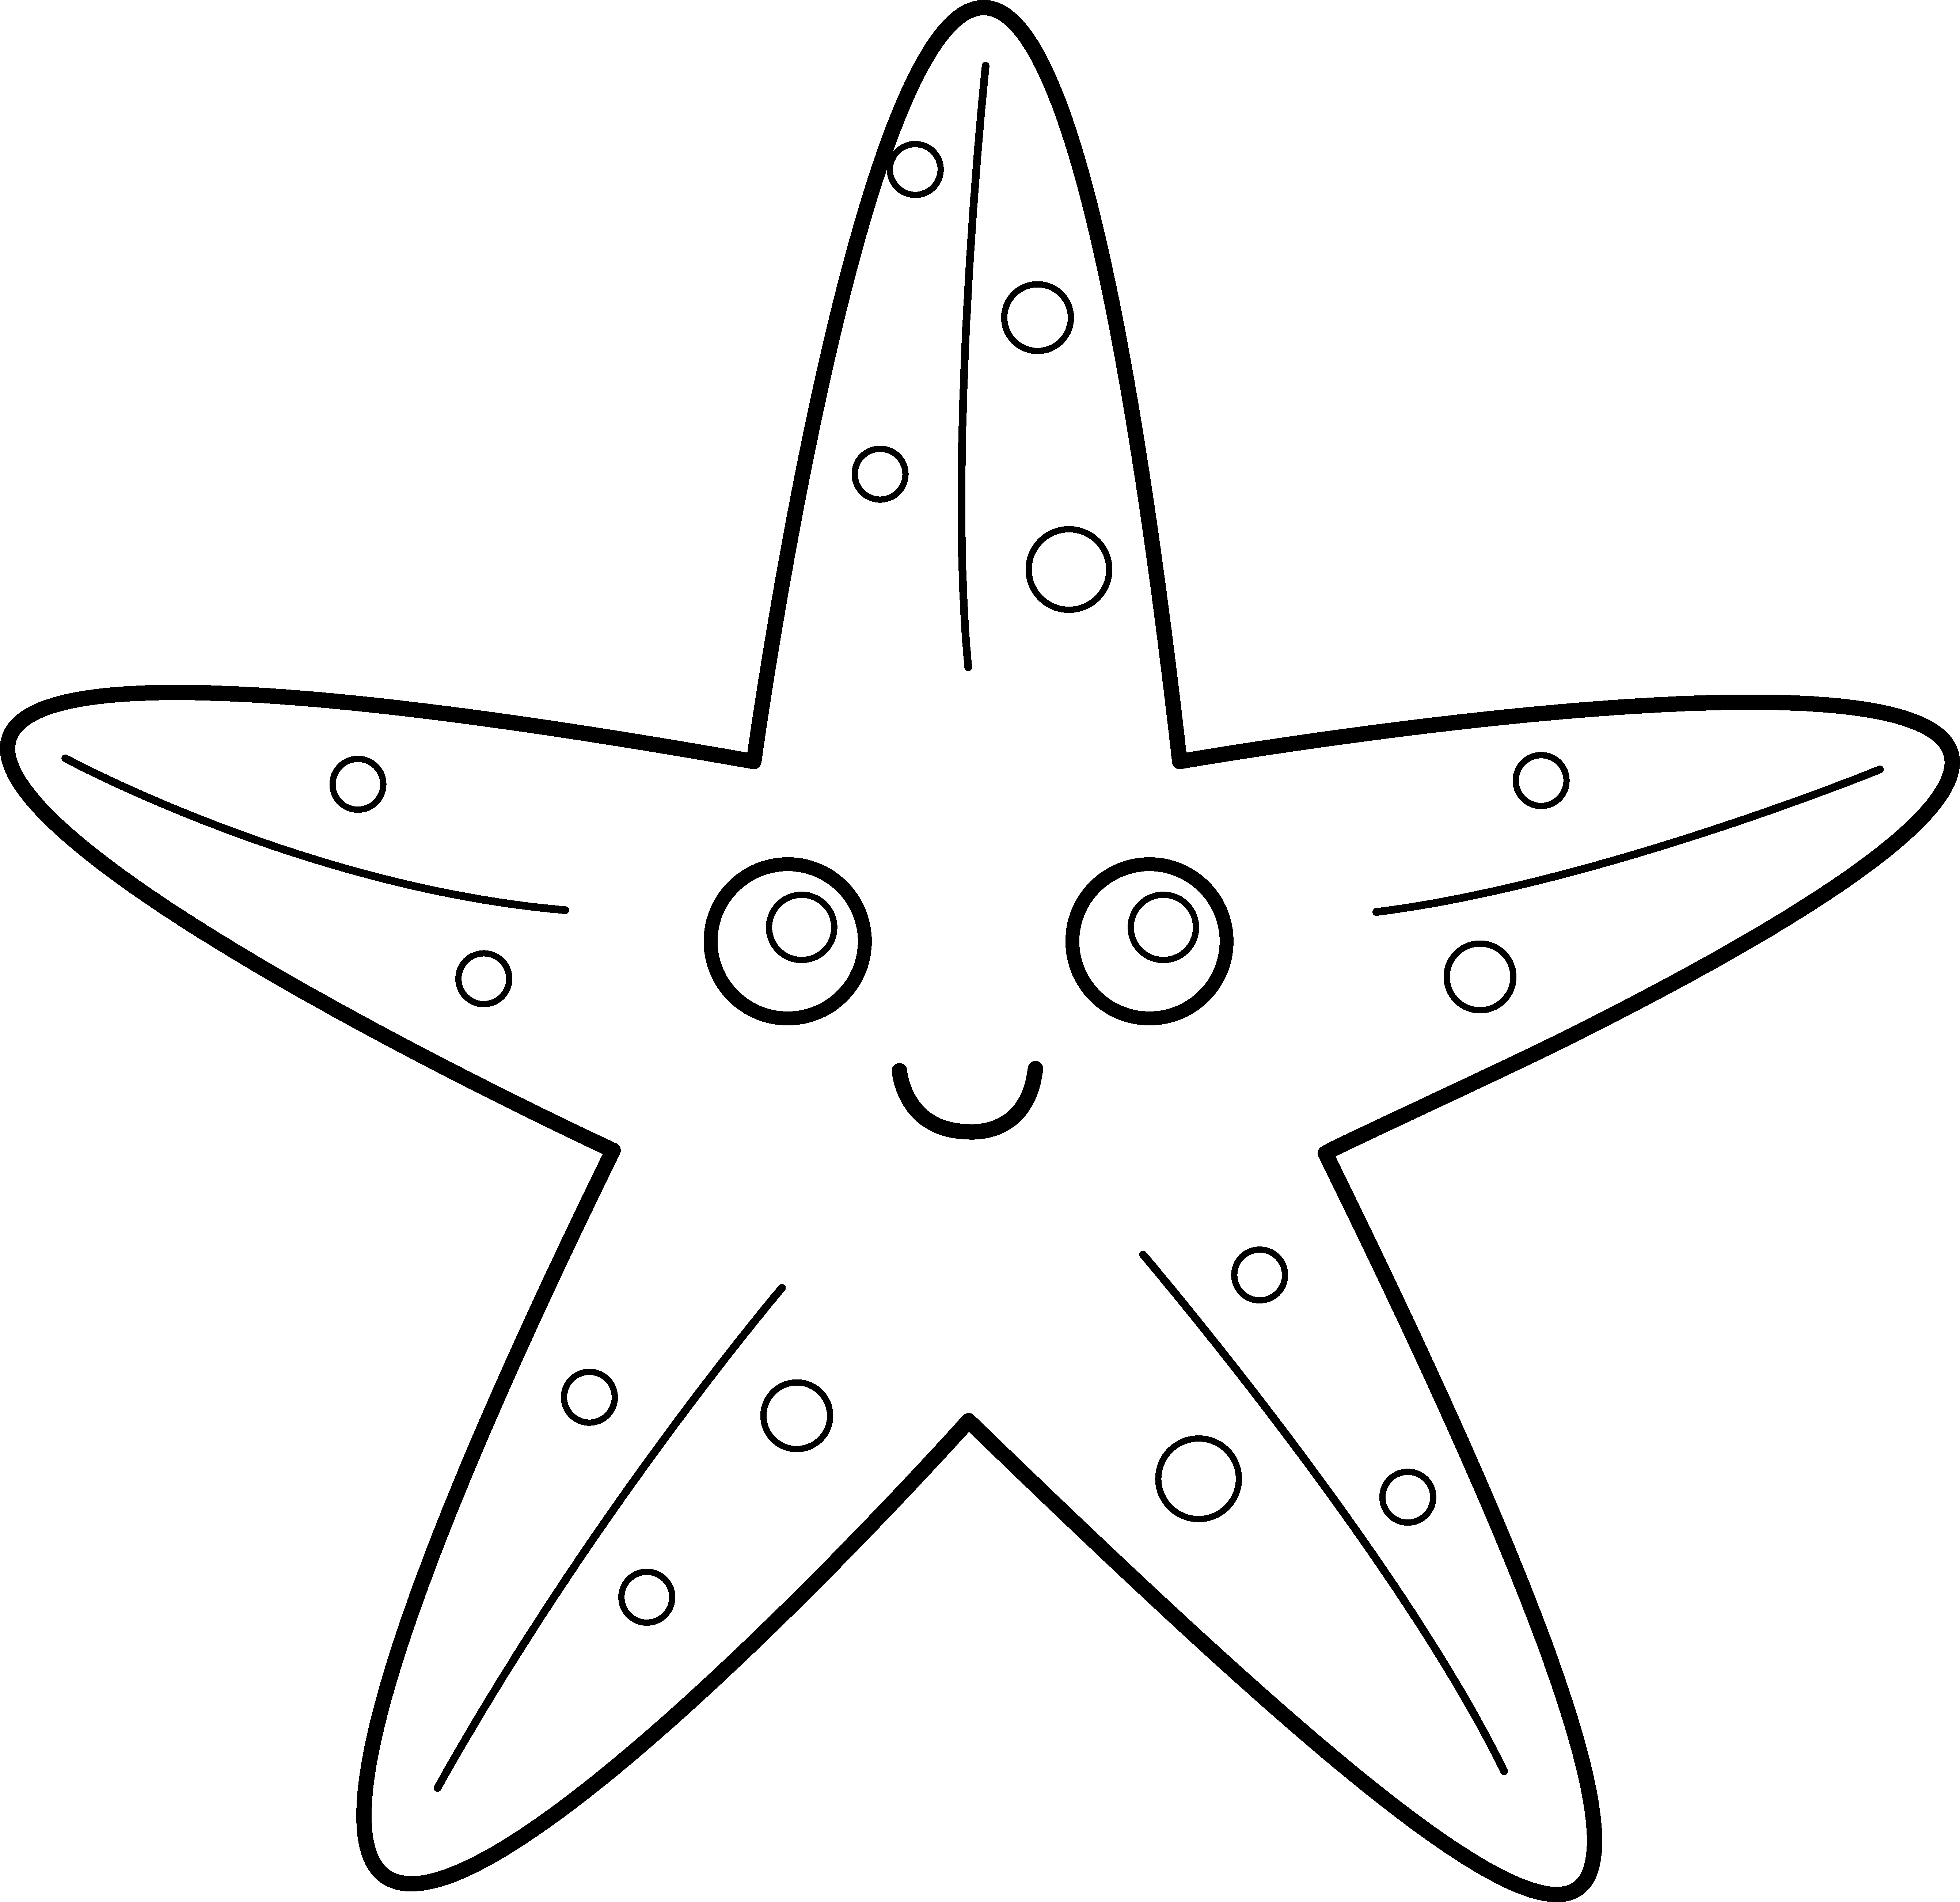 starfish clipart object